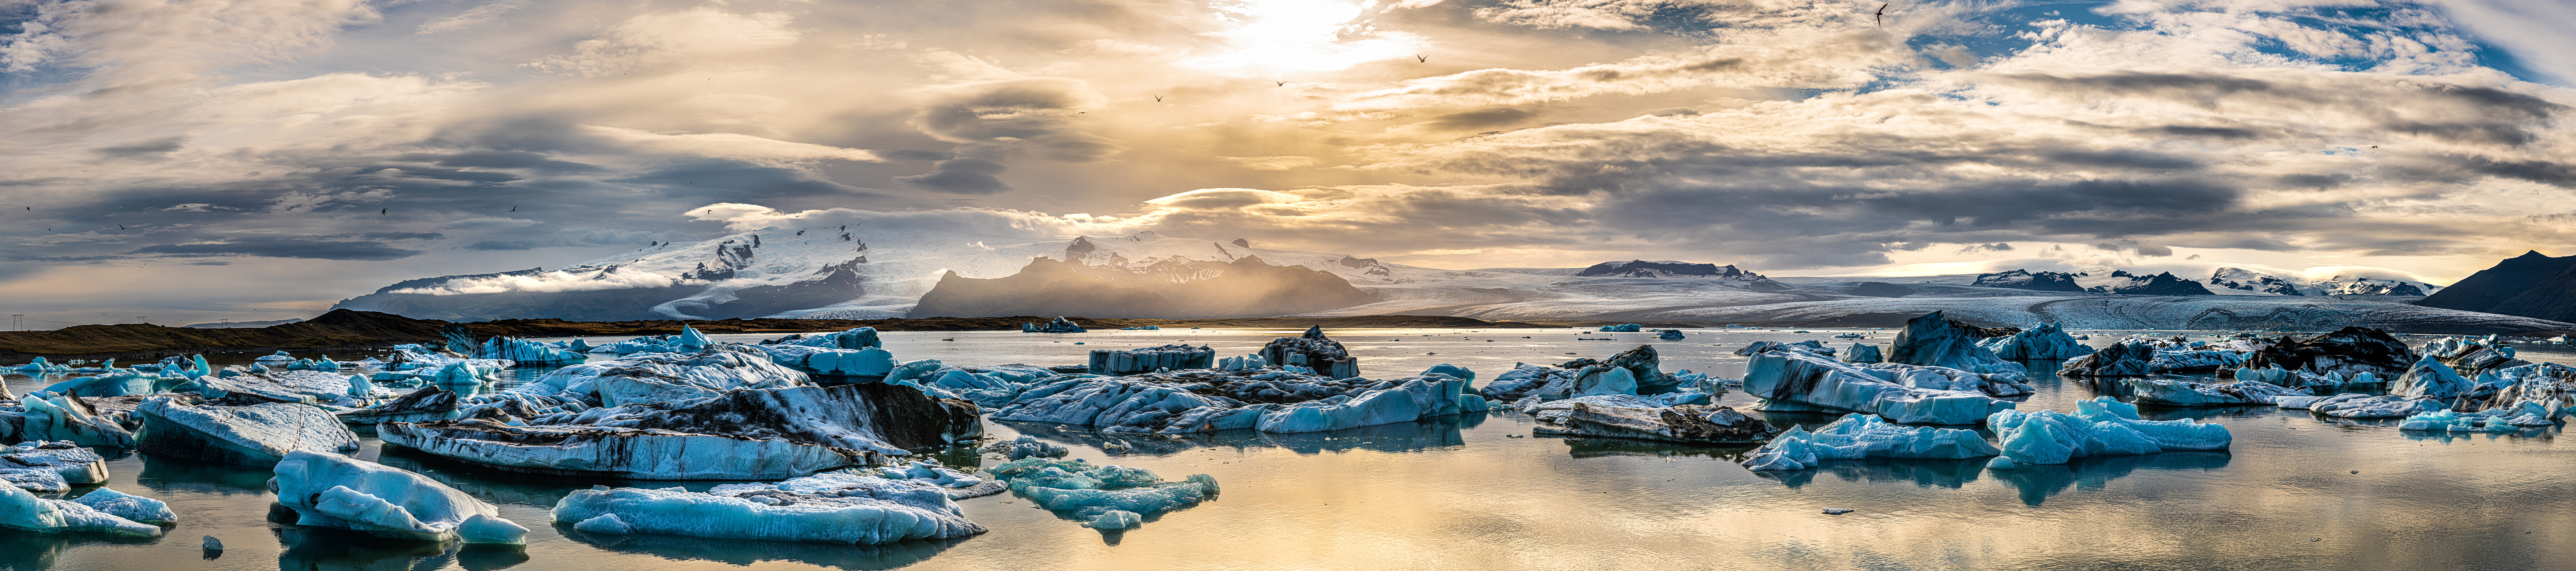 iceberg in Iceland